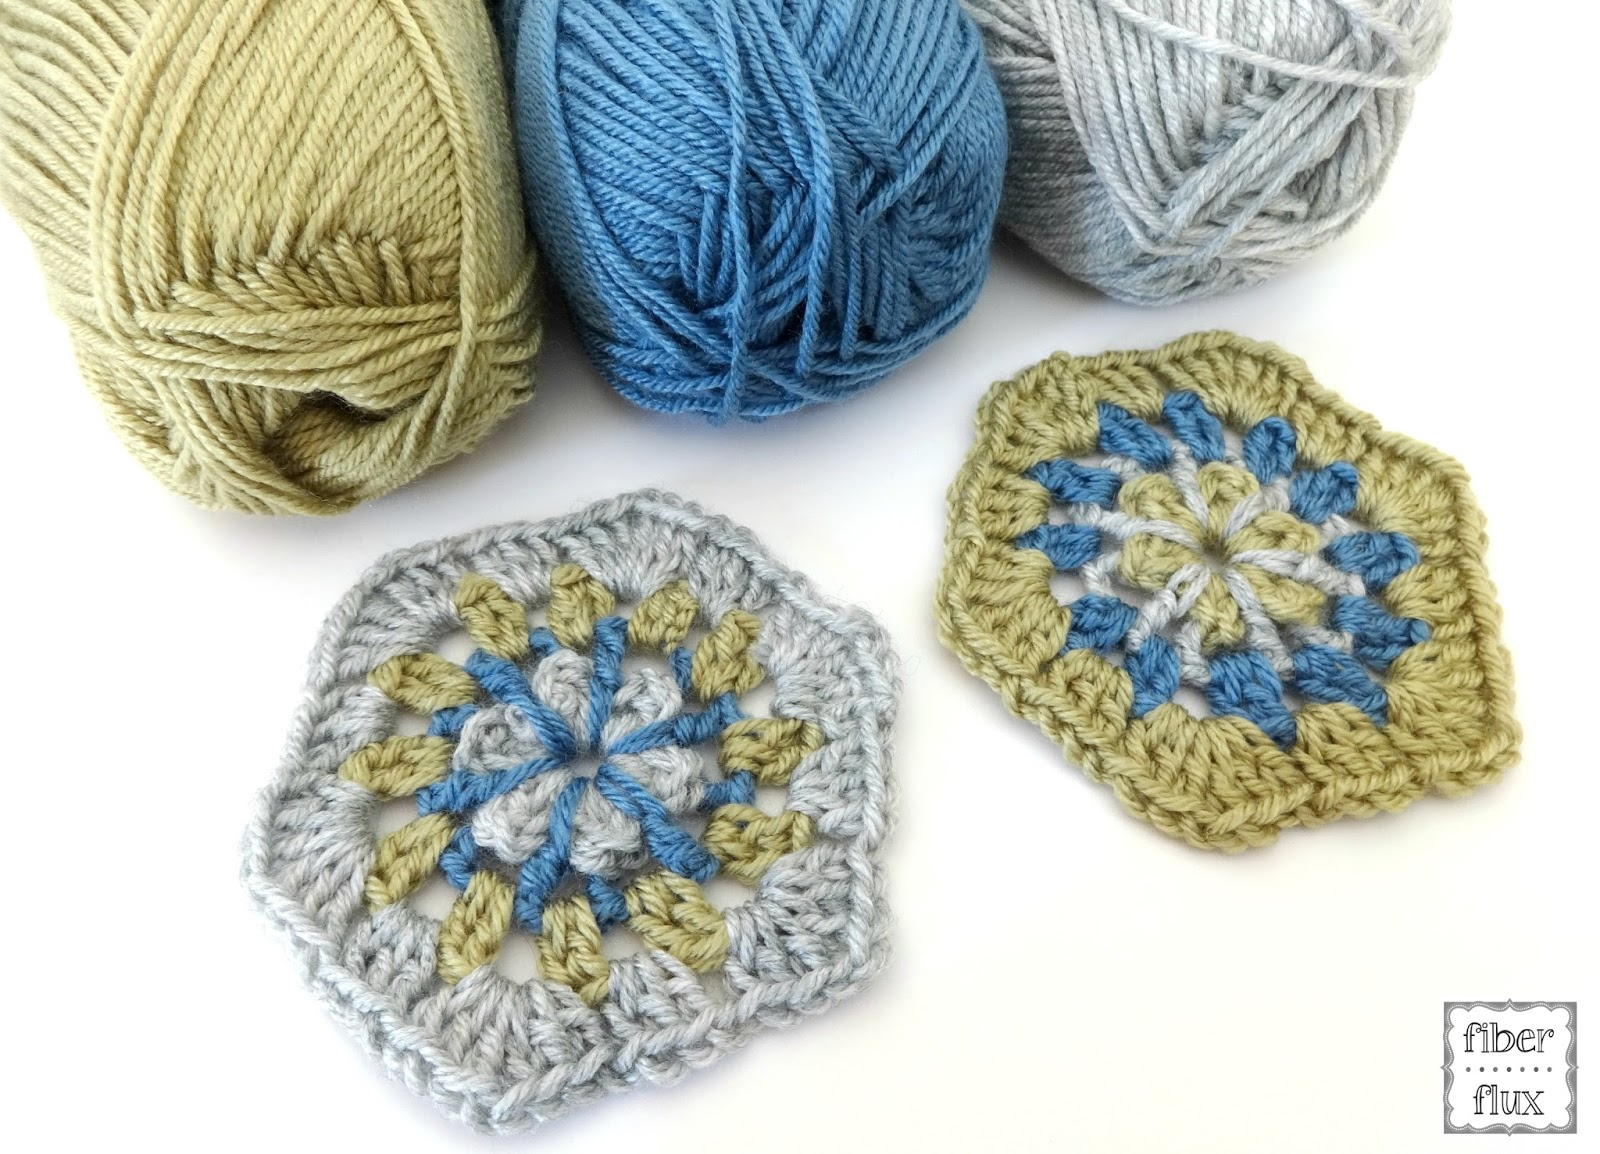 Motif Patterns Crochet Fiber Flux Free Crochet Patternstrawflower Hexagon Motif